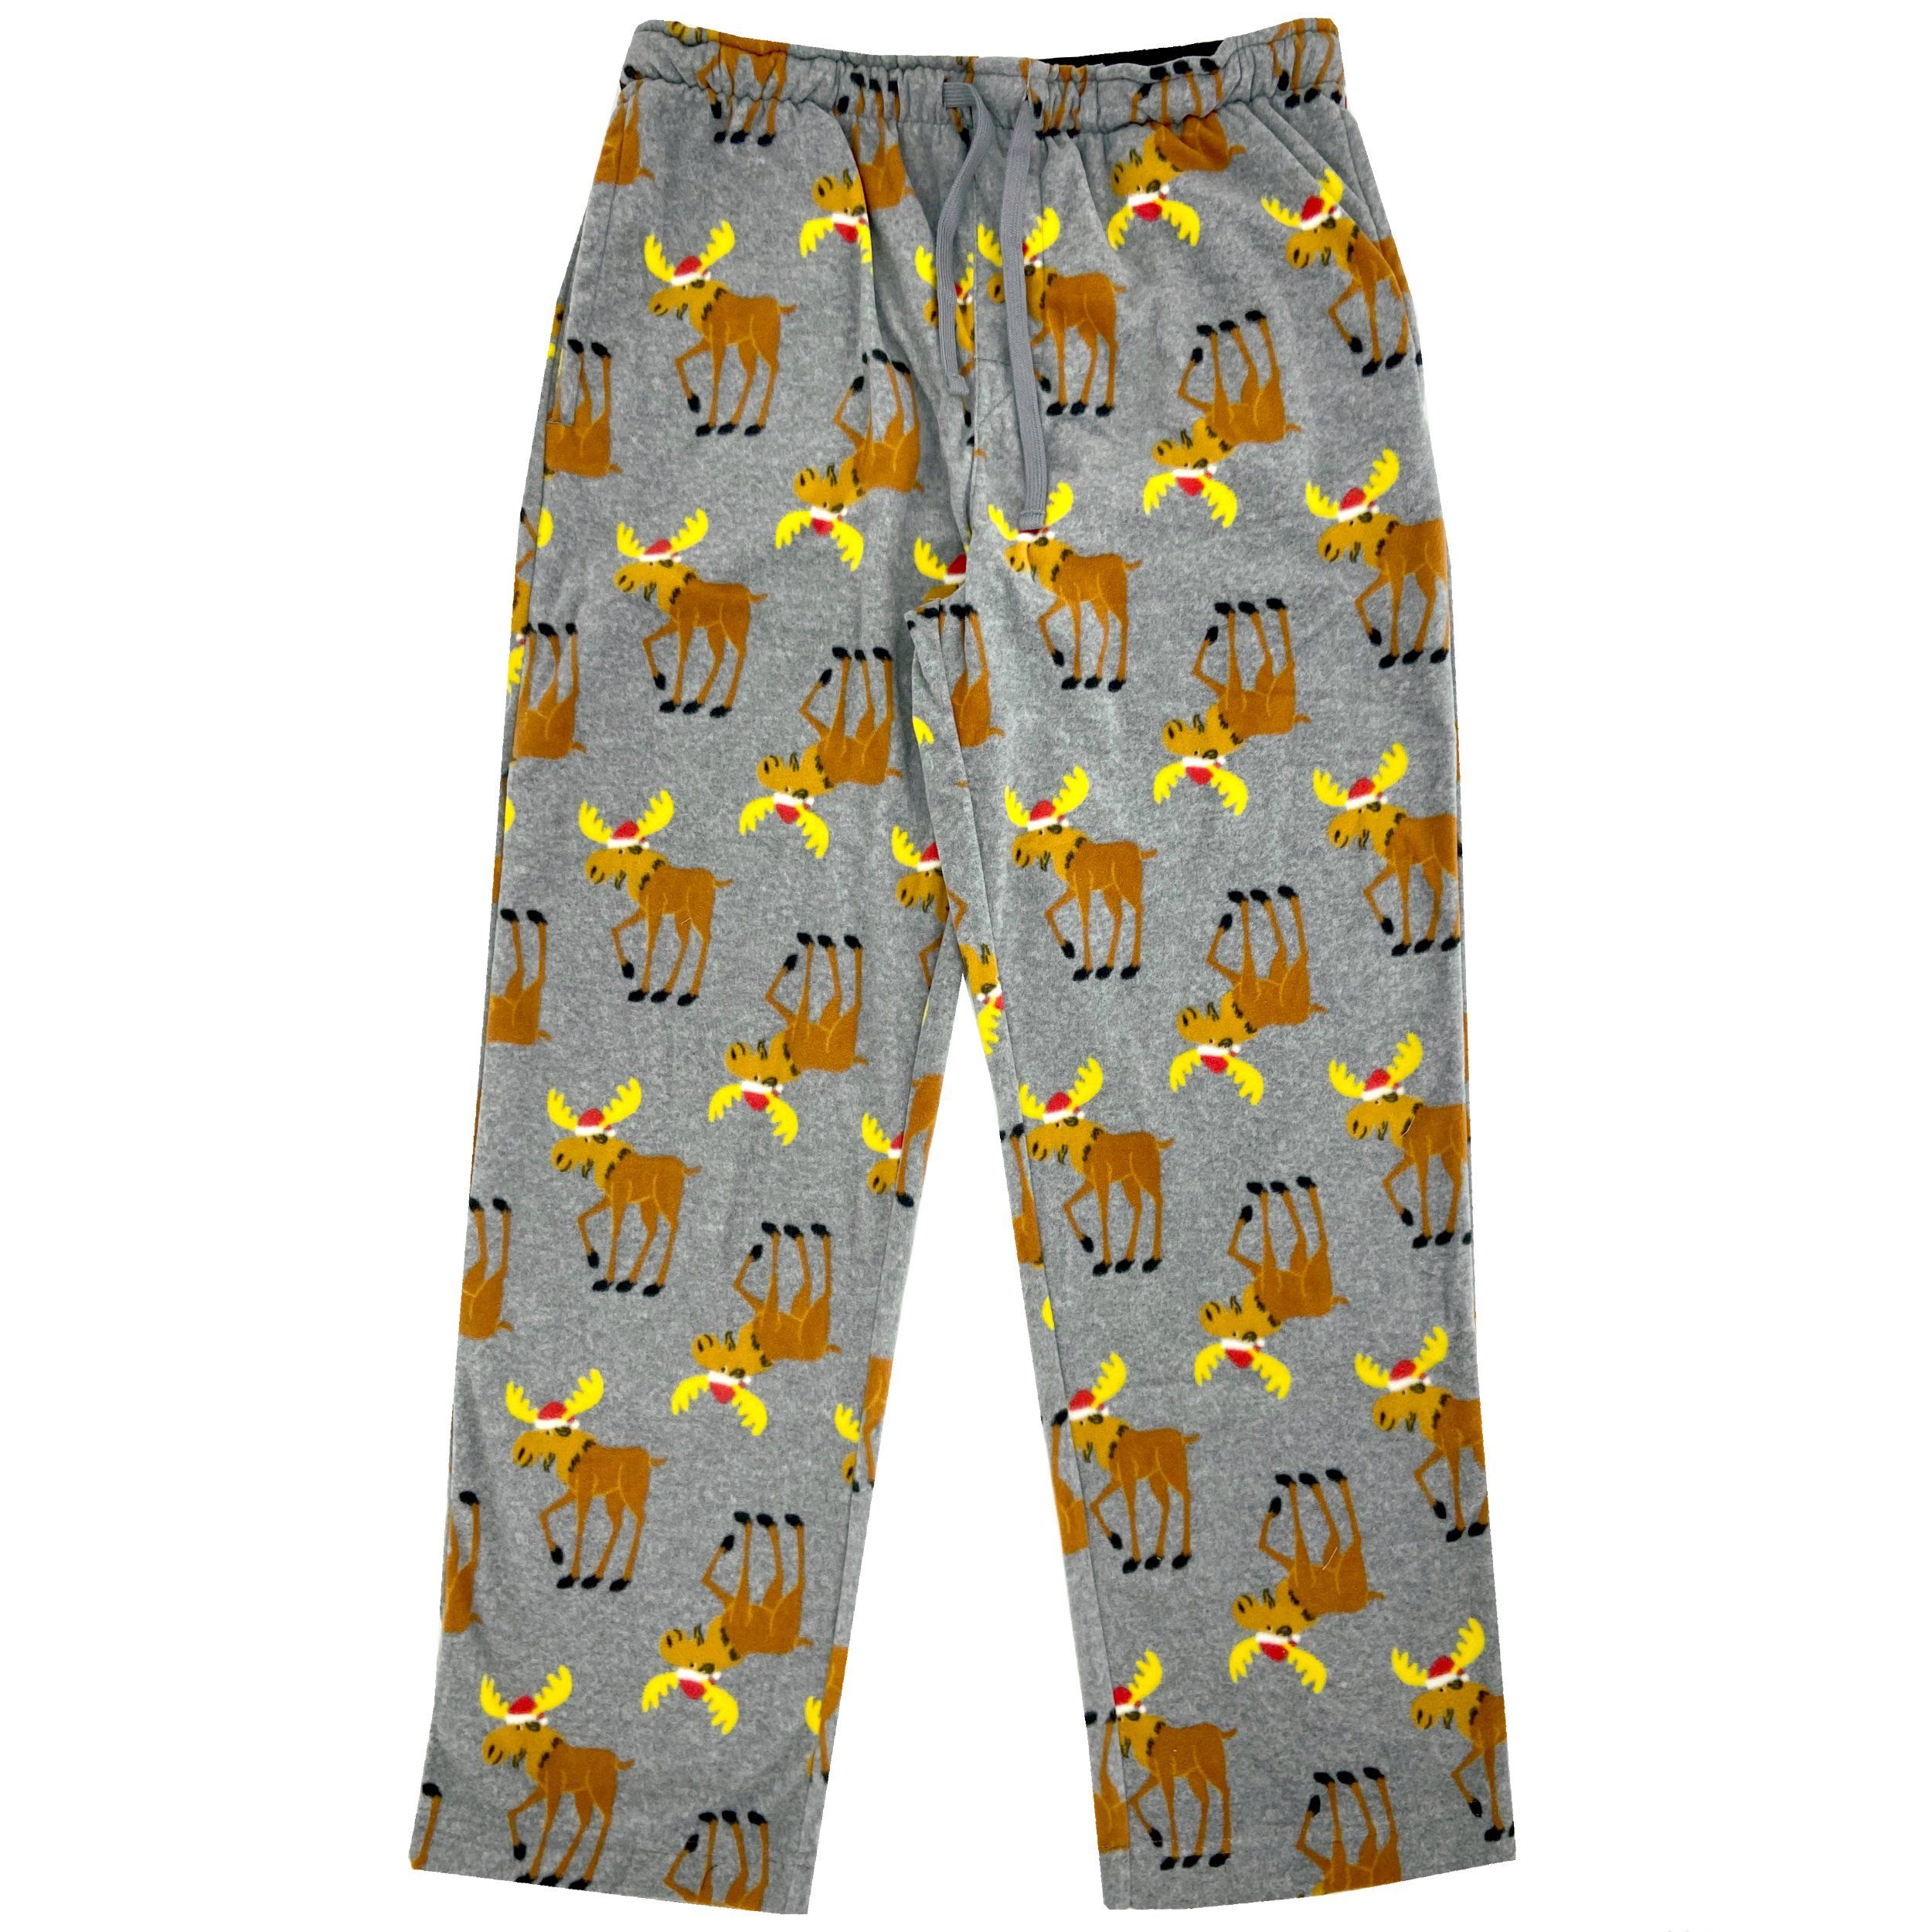 Fun Festive Fleece Pajama Pants for Outdoorsy Men. Moose All Over Print Sleep Bottoms